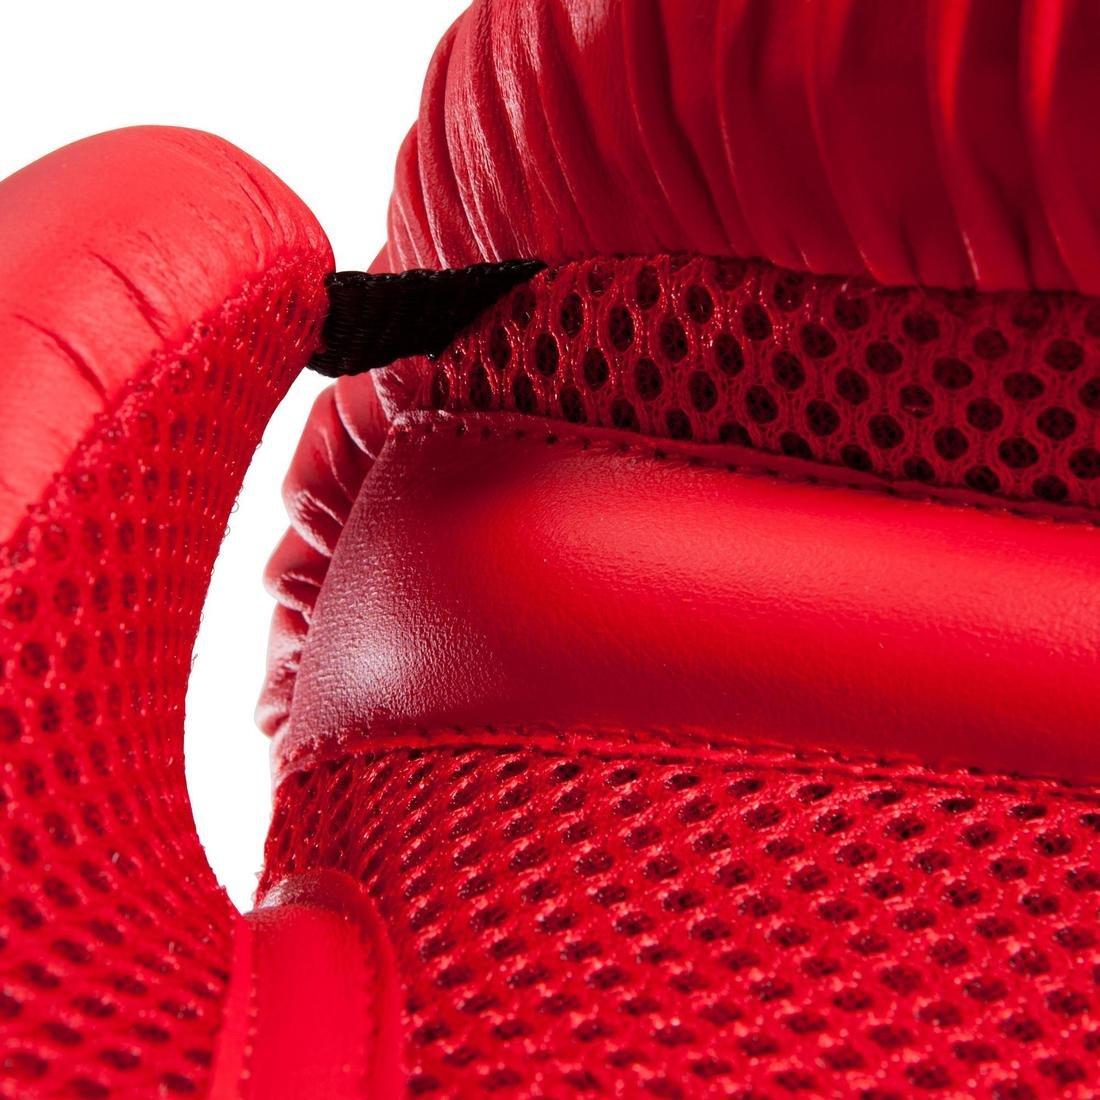 OUTSHOCK - Unisex Beginner Boxing Gloves - 100, Cherry Red